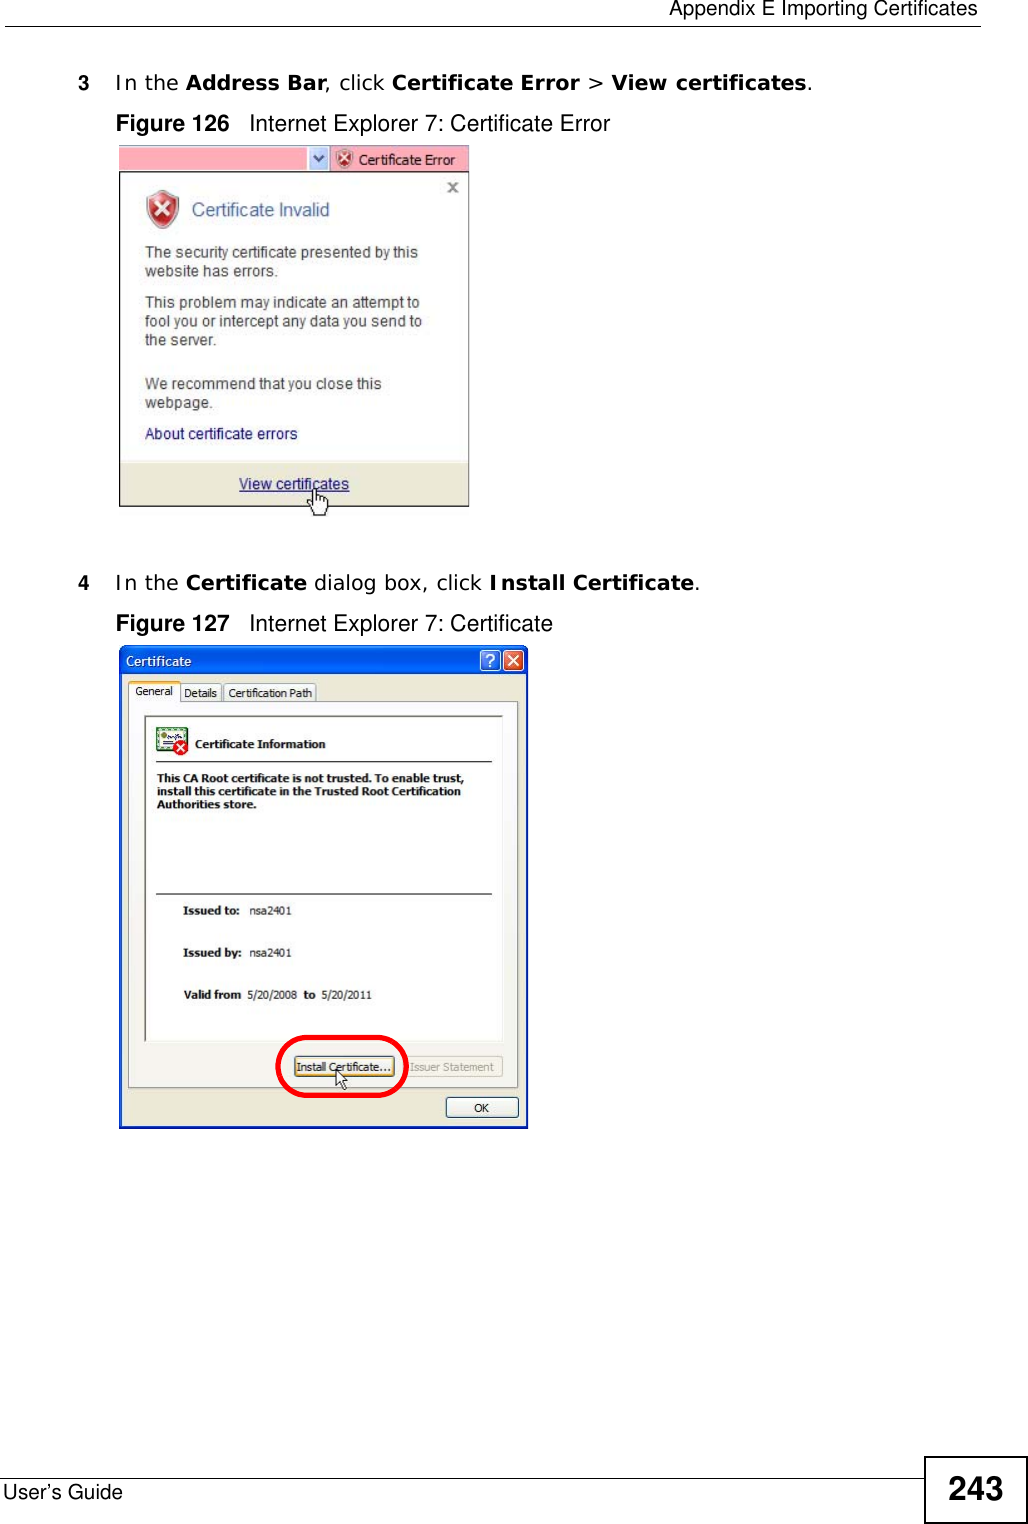  Appendix E Importing CertificatesUser’s Guide 2433In the Address Bar, click Certificate Error &gt; View certificates.Figure 126   Internet Explorer 7: Certificate Error4In the Certificate dialog box, click Install Certificate.Figure 127   Internet Explorer 7: Certificate